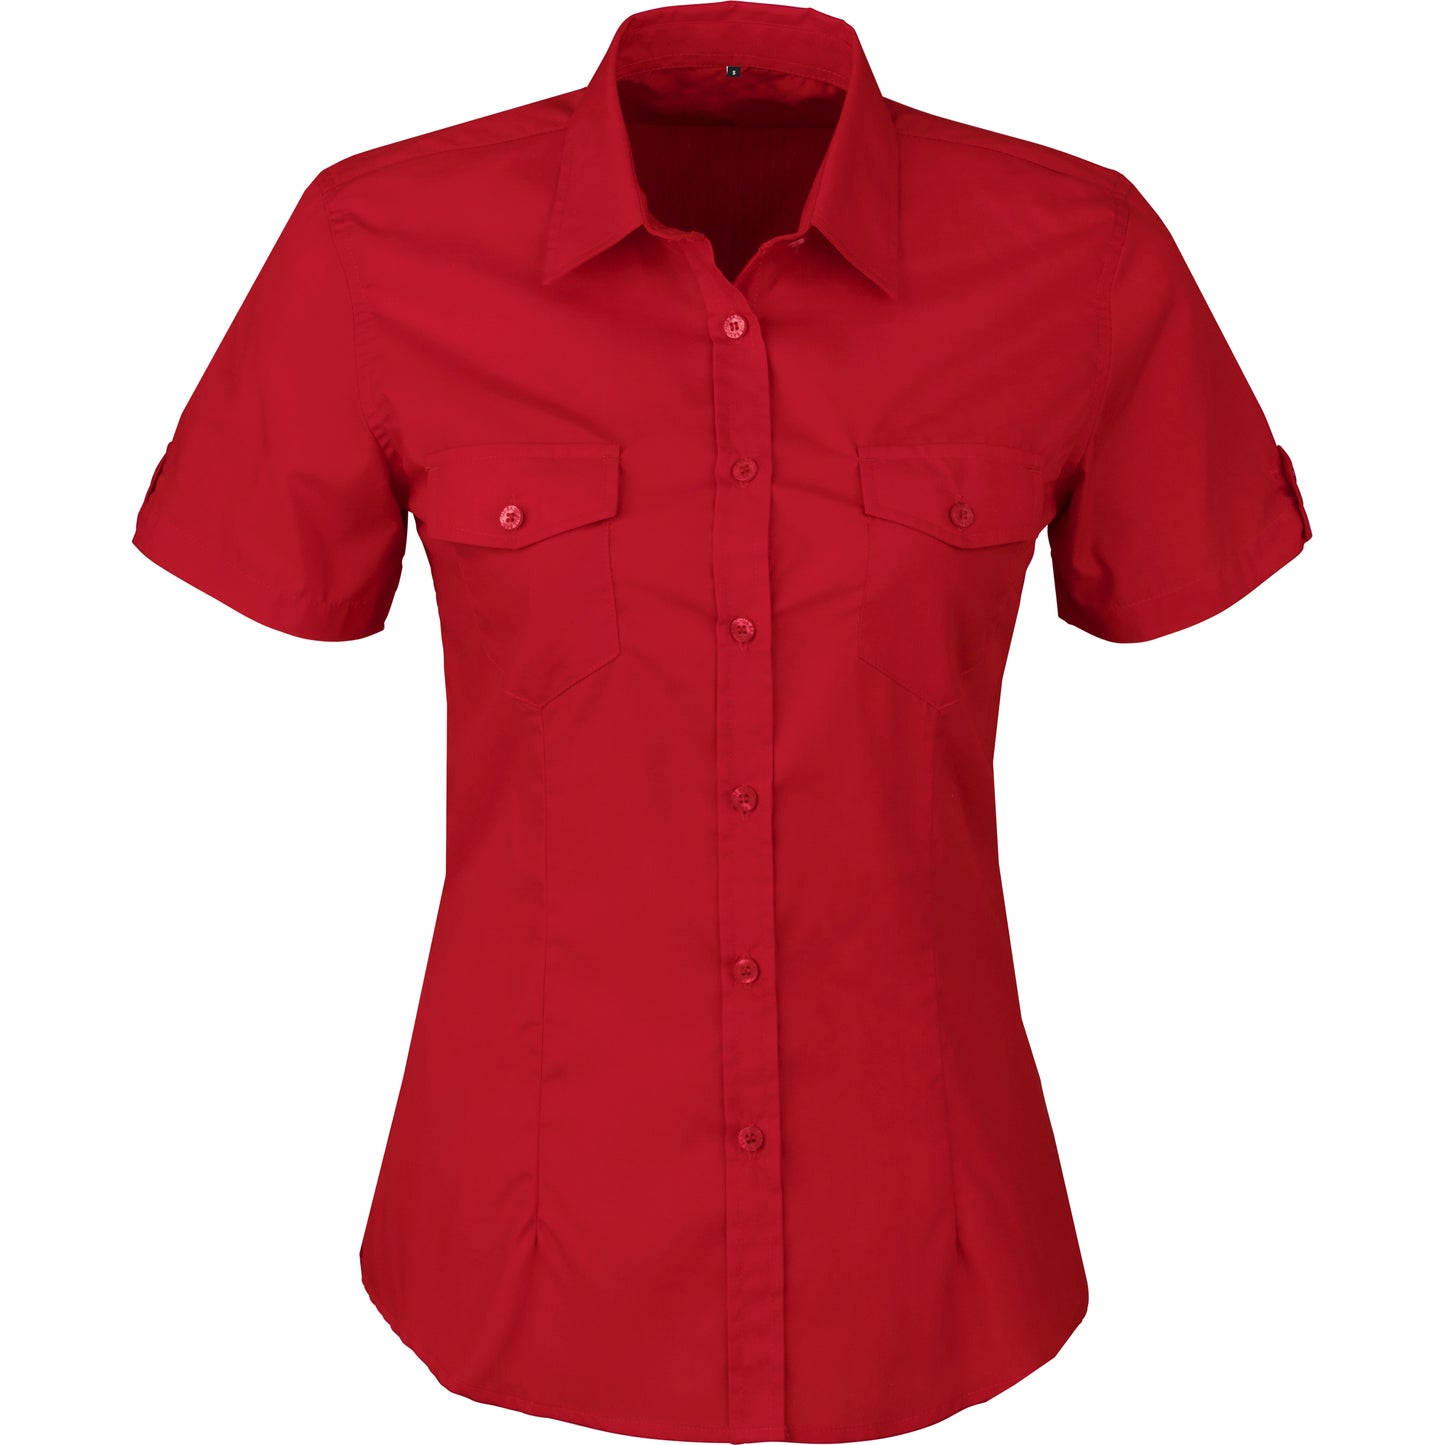 Ladies Short Sleeve Kensington Shirt - Red Only